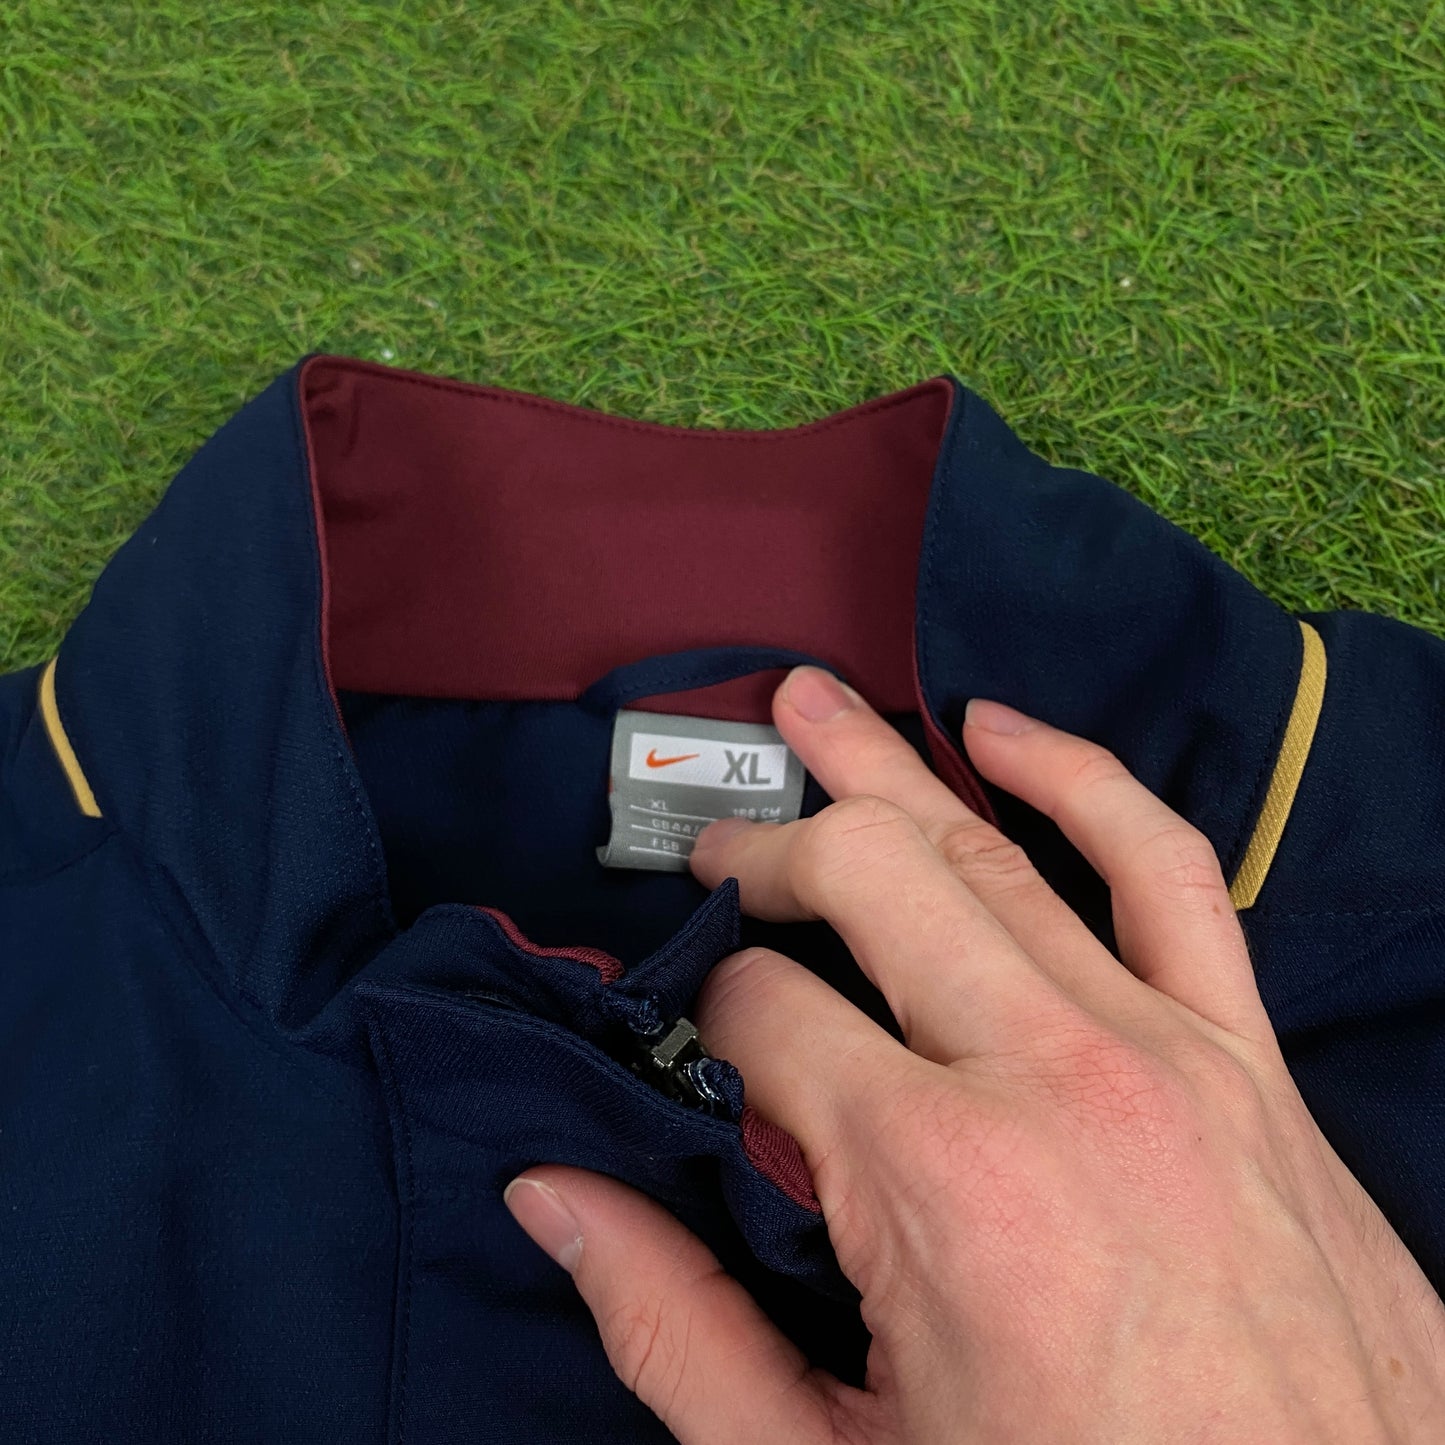 00s Nike Arsenal Tracksuit Set Jacket + Joggers Blue XL